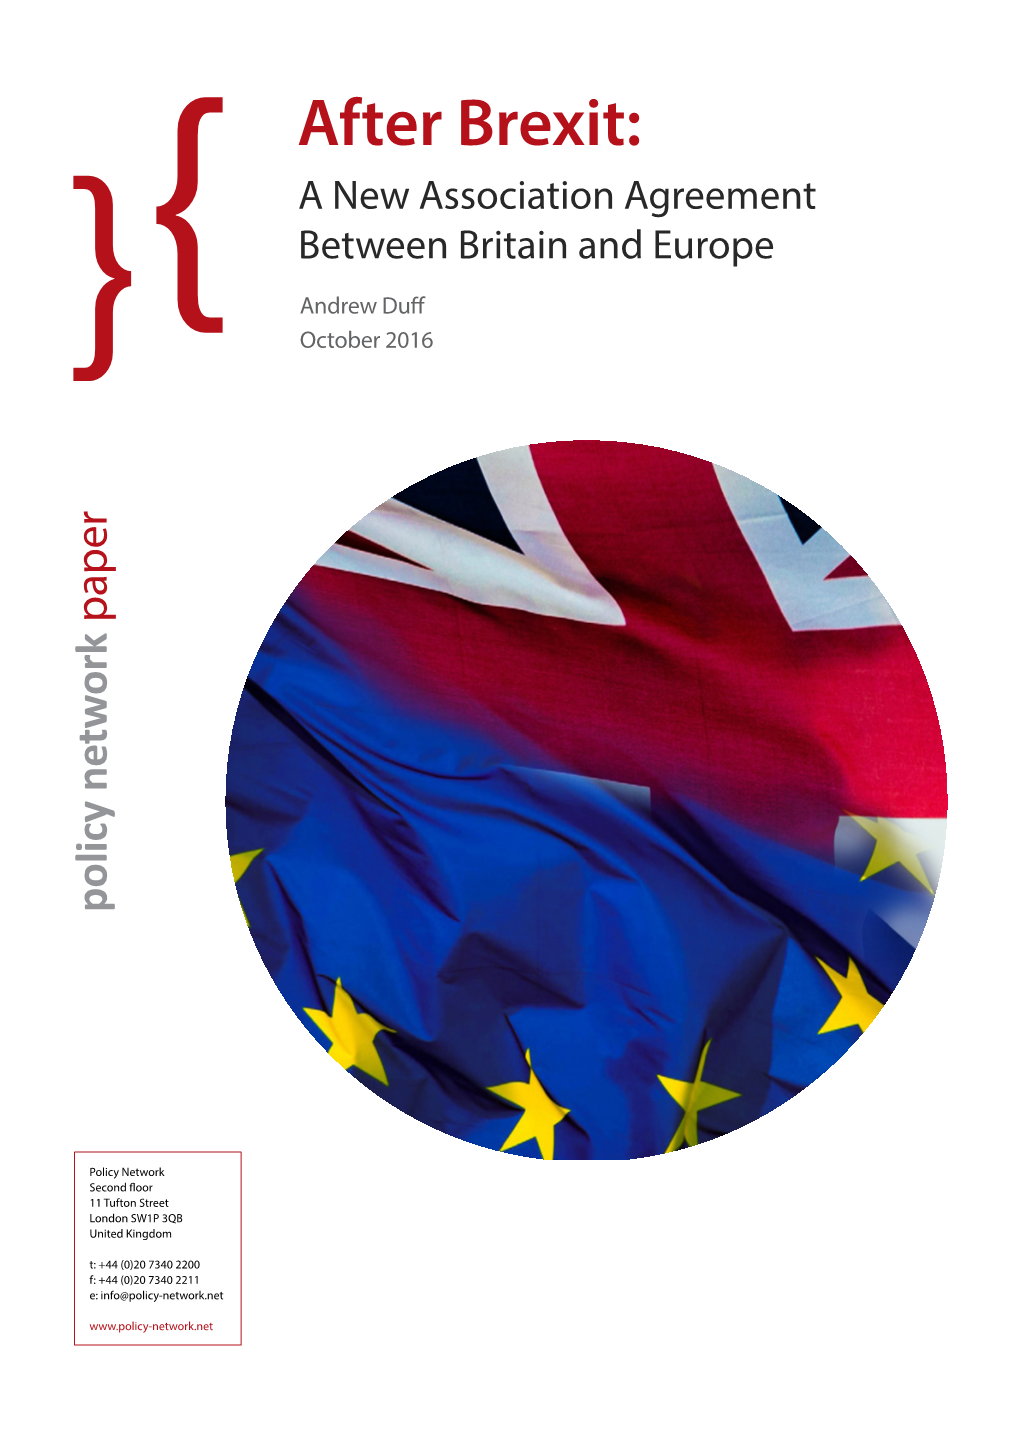 After Brexit: Between Britain Andeurope Britain Between a Newassociation Agreement October 2016 October Andrew Duff